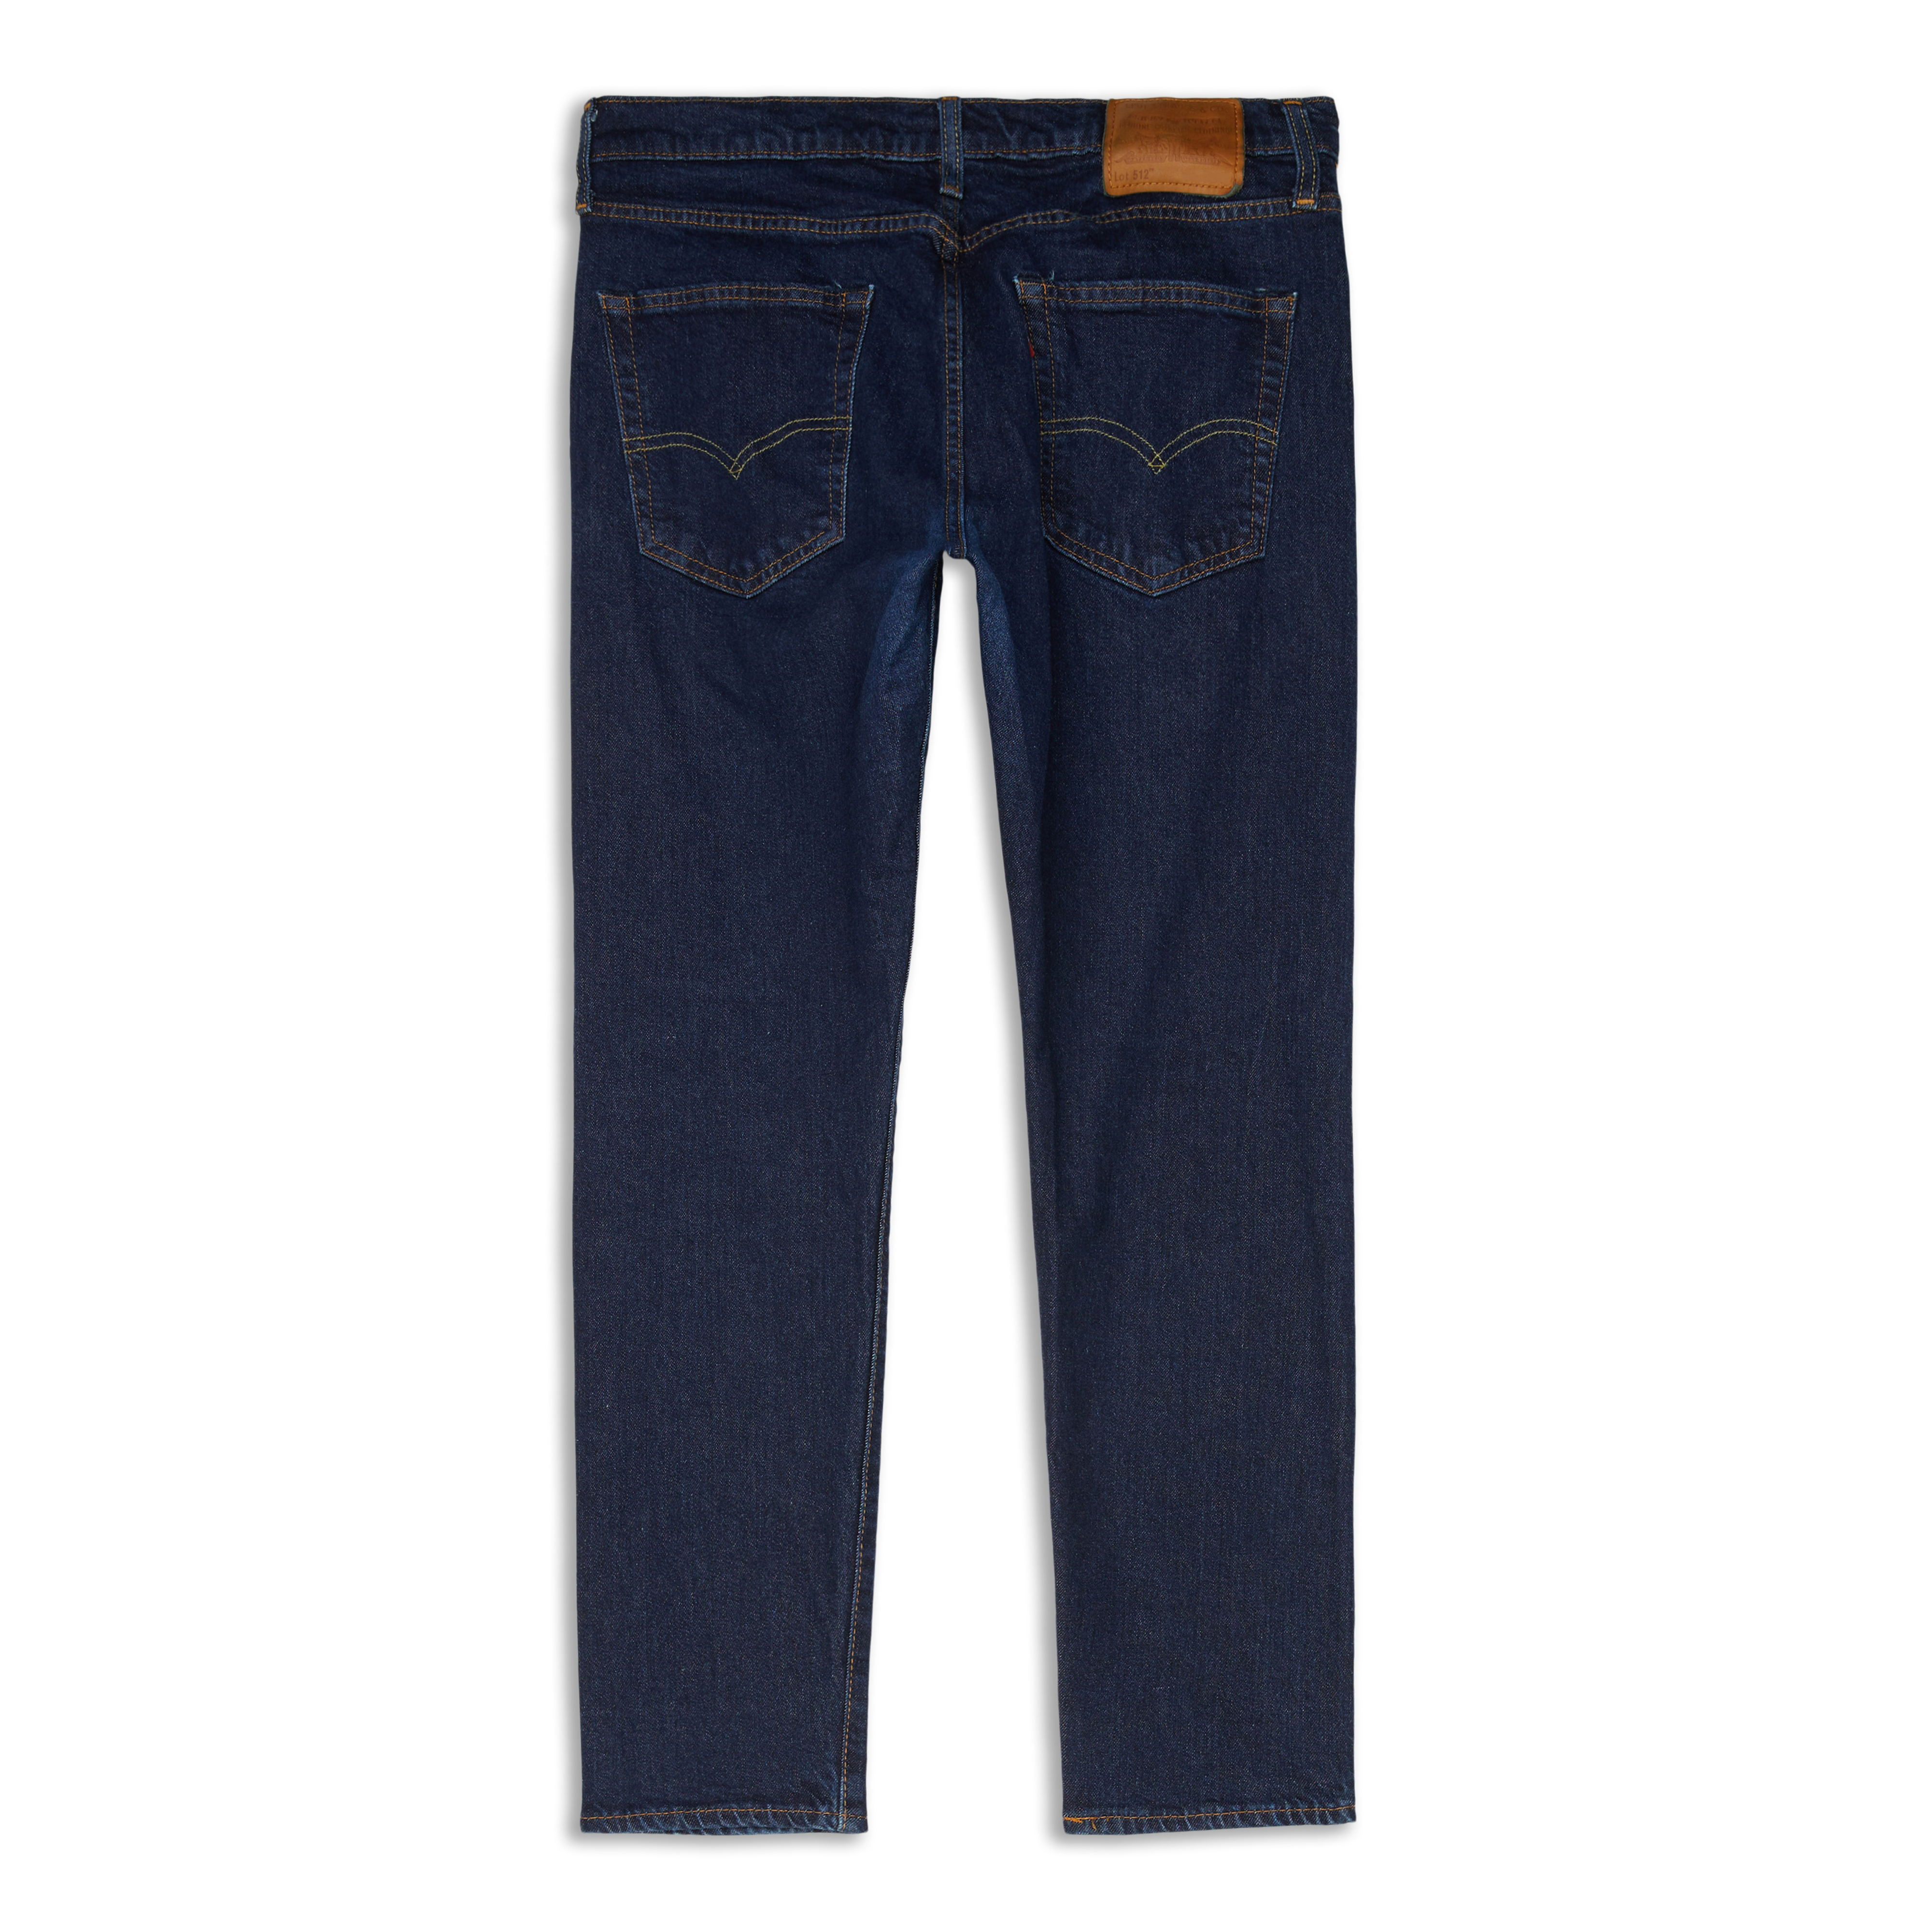 Levis 512™ Slim Taper Fit Men's Jeans Original